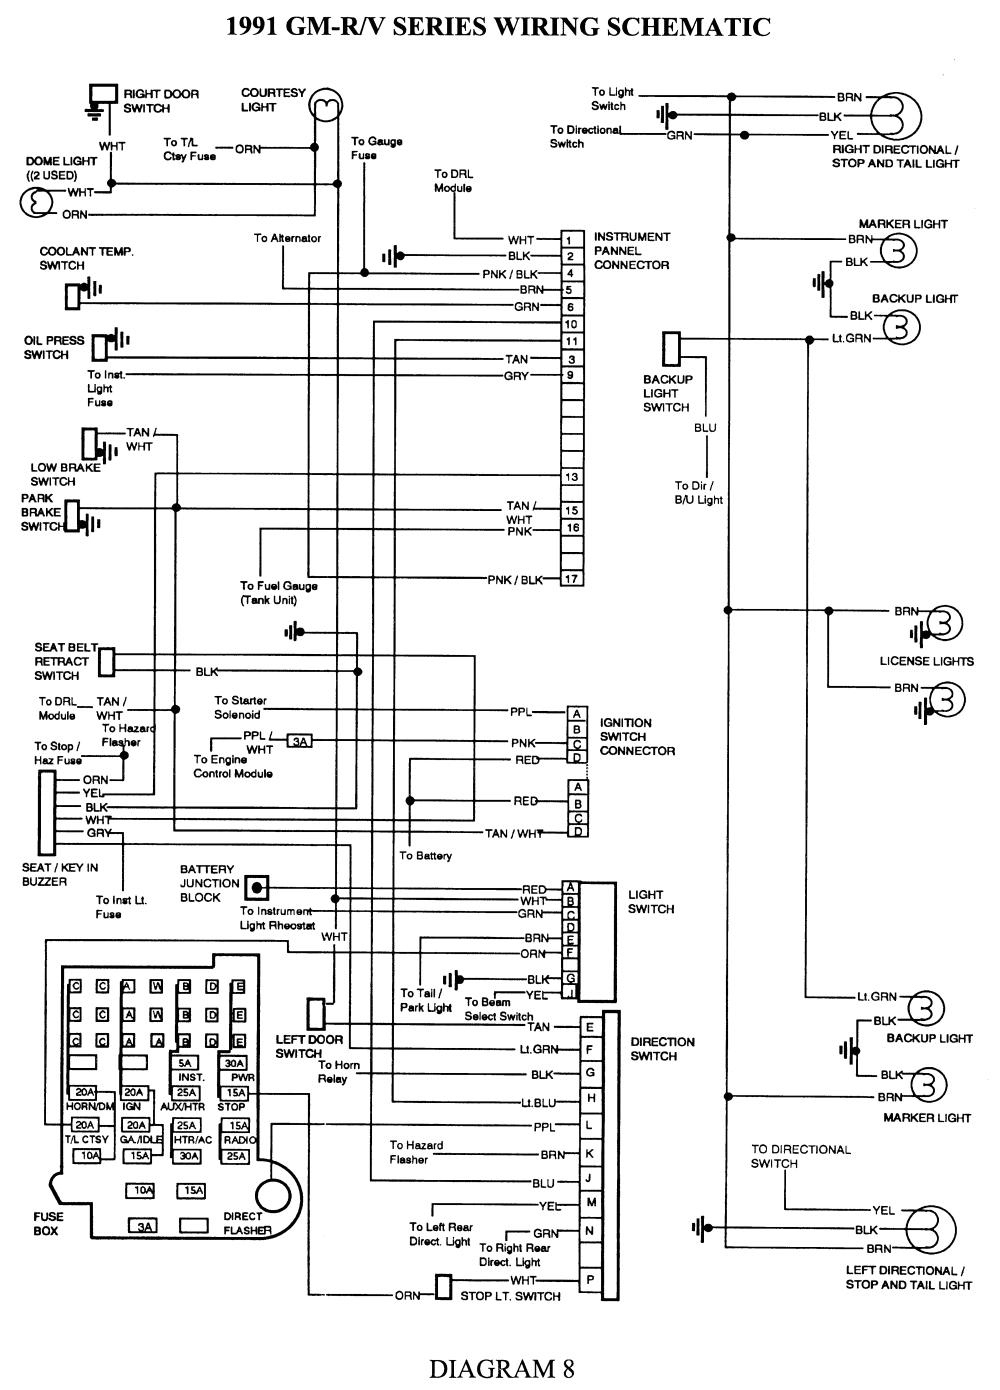 gm electrical diagrams wiring diagram files free general motors wiring diagrams